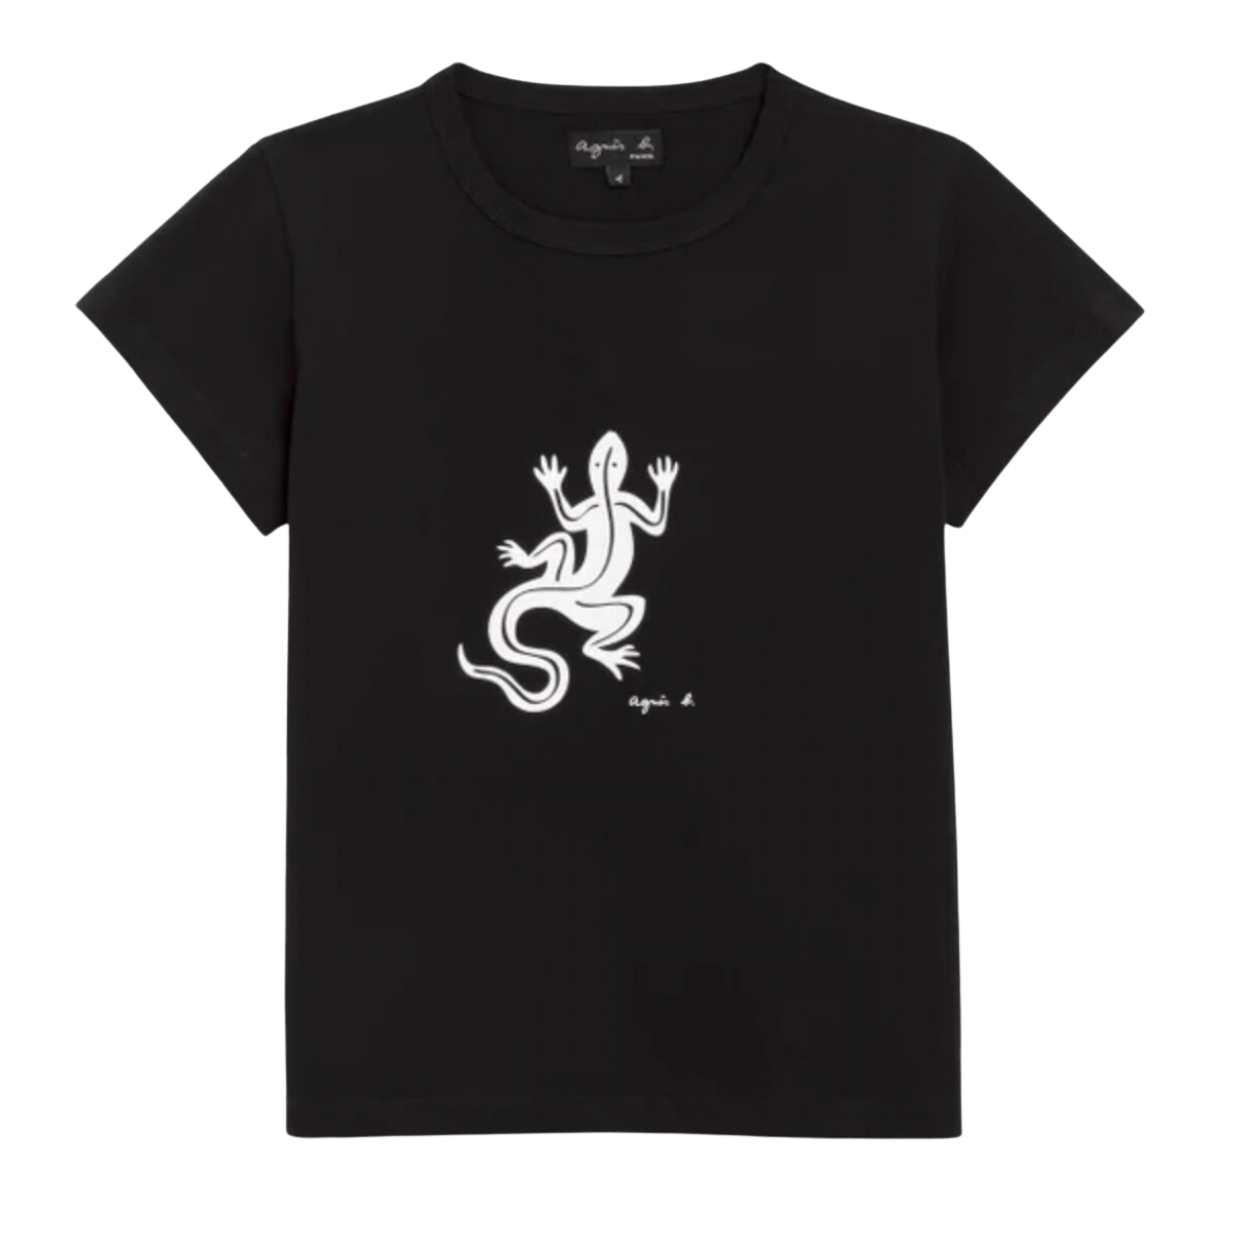 AGNÈS B - T-shirt Brando noir lézard - 10 ans